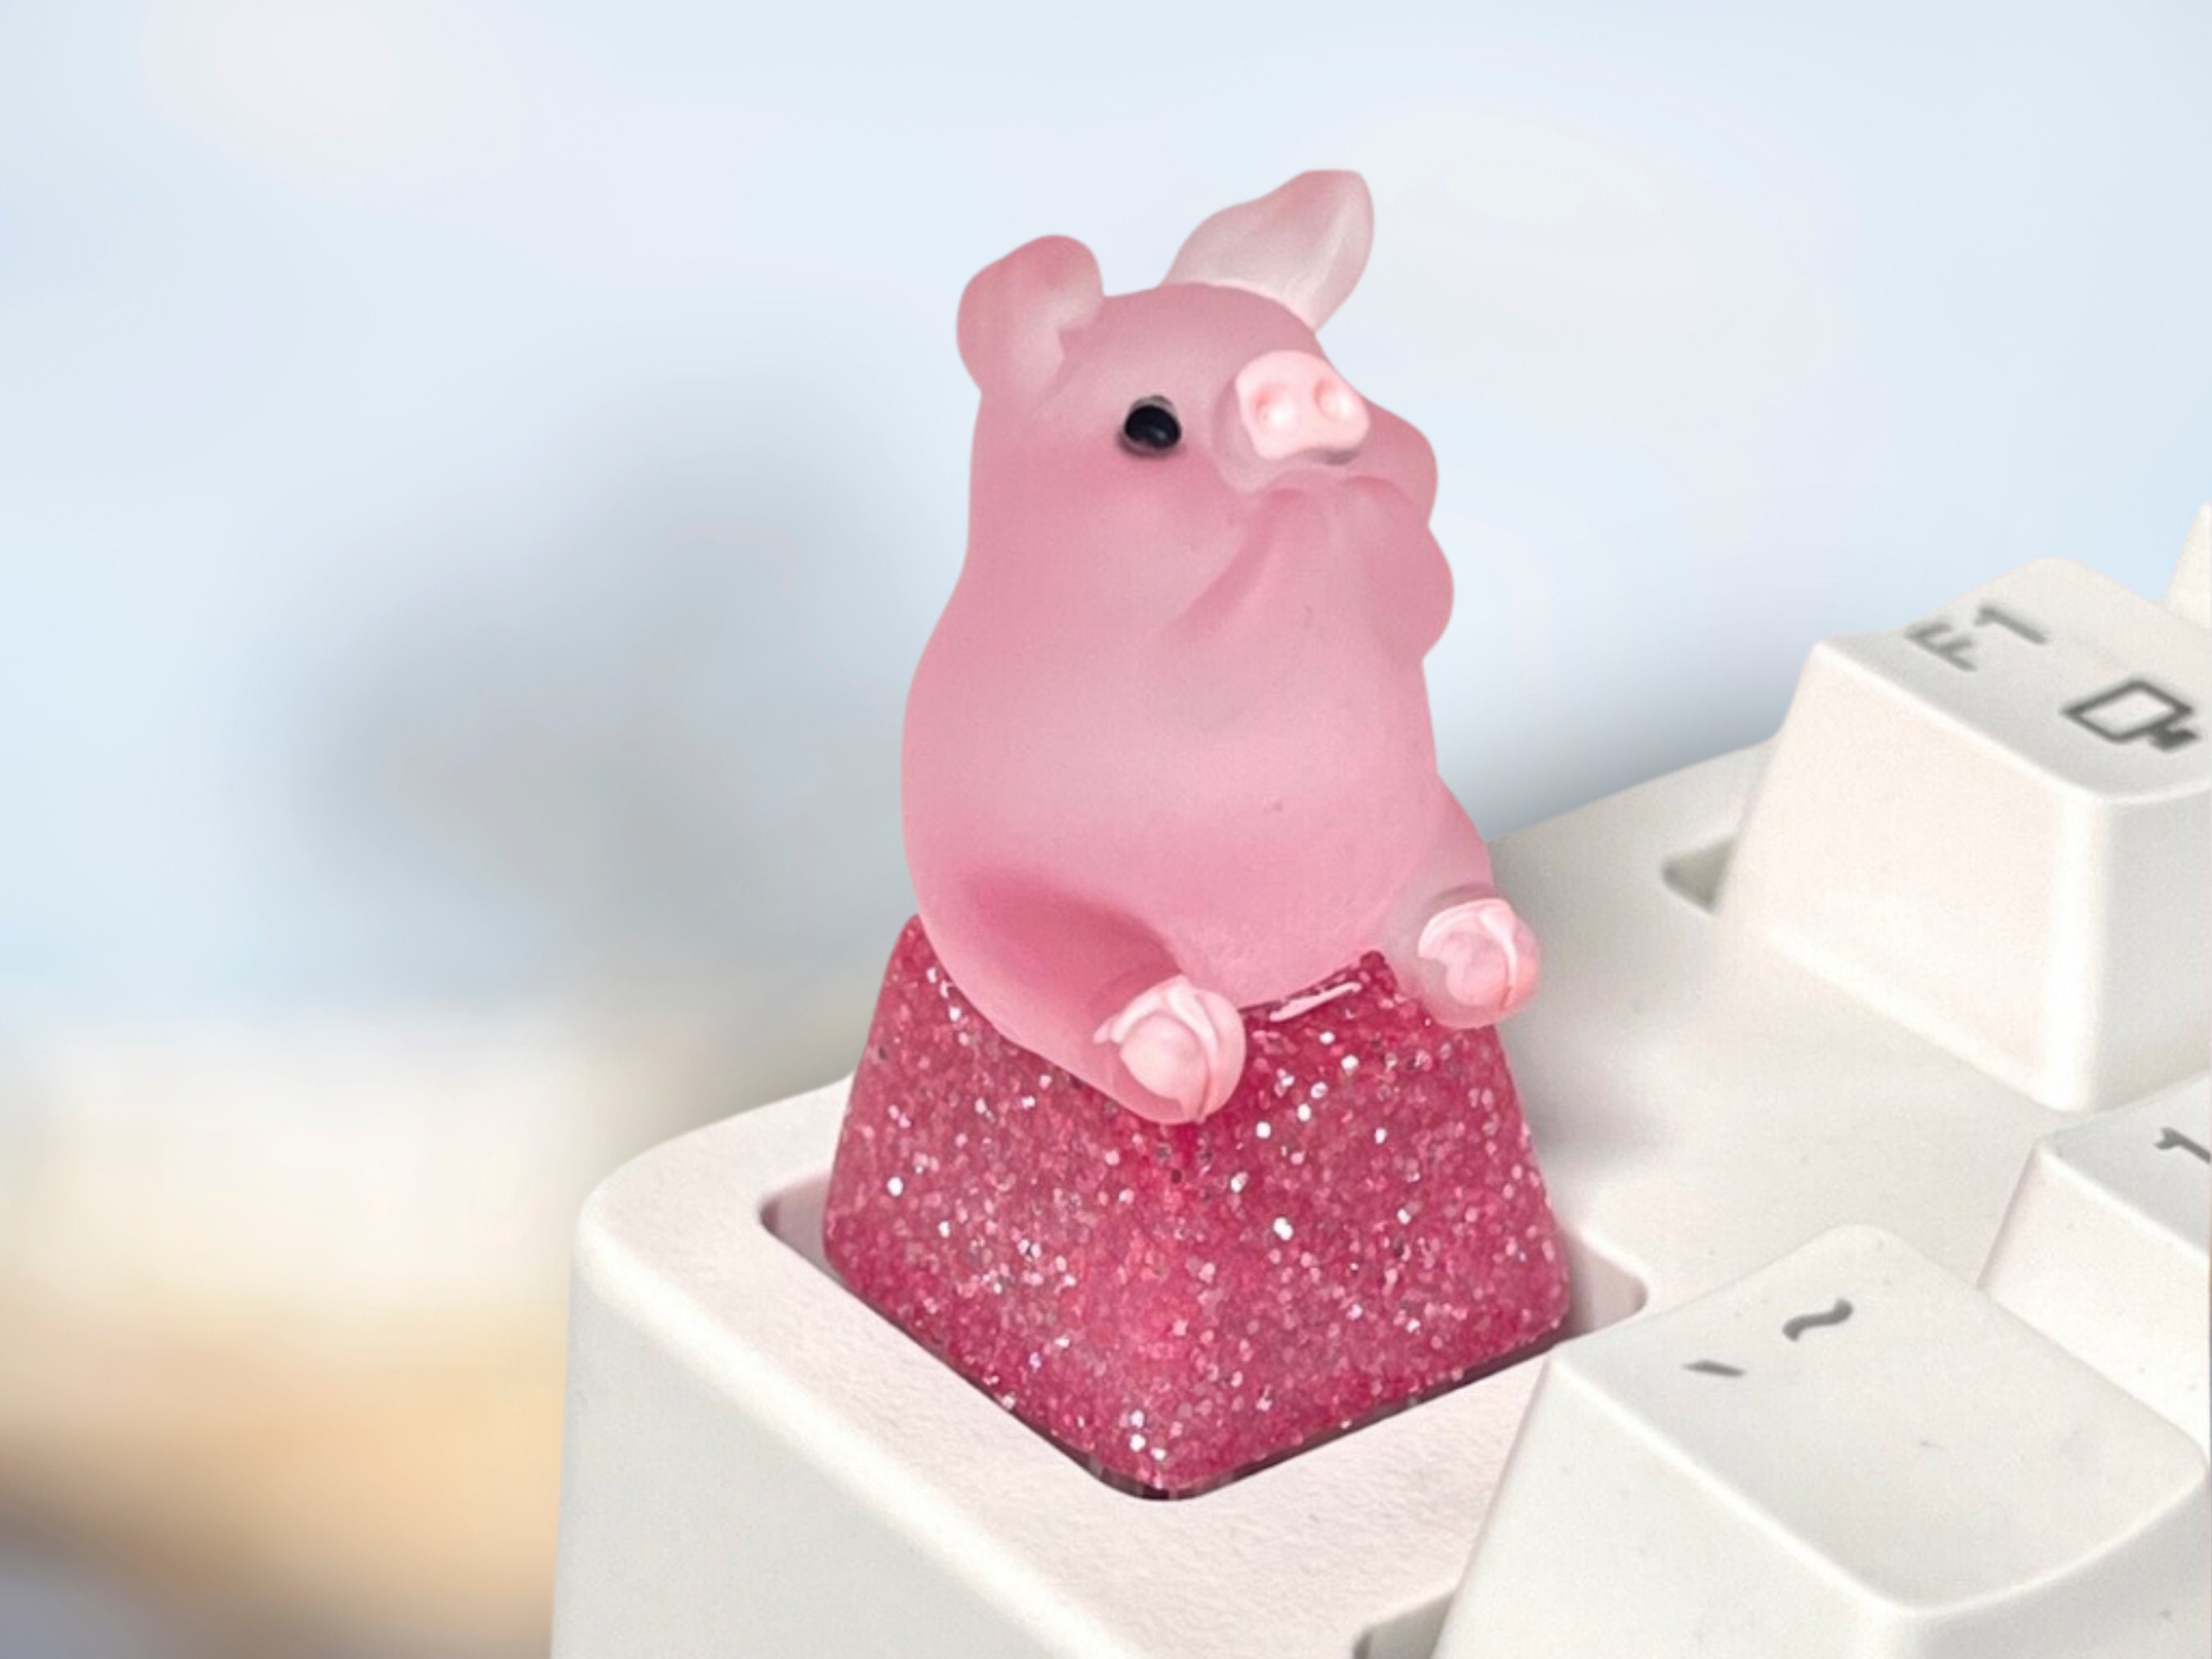 Pinky Pig Keycap, Cute Animal Keycap, Artisan Keycap, Keycap for MX Cherry Switches Mechanical Keyboard, Handmade Gift